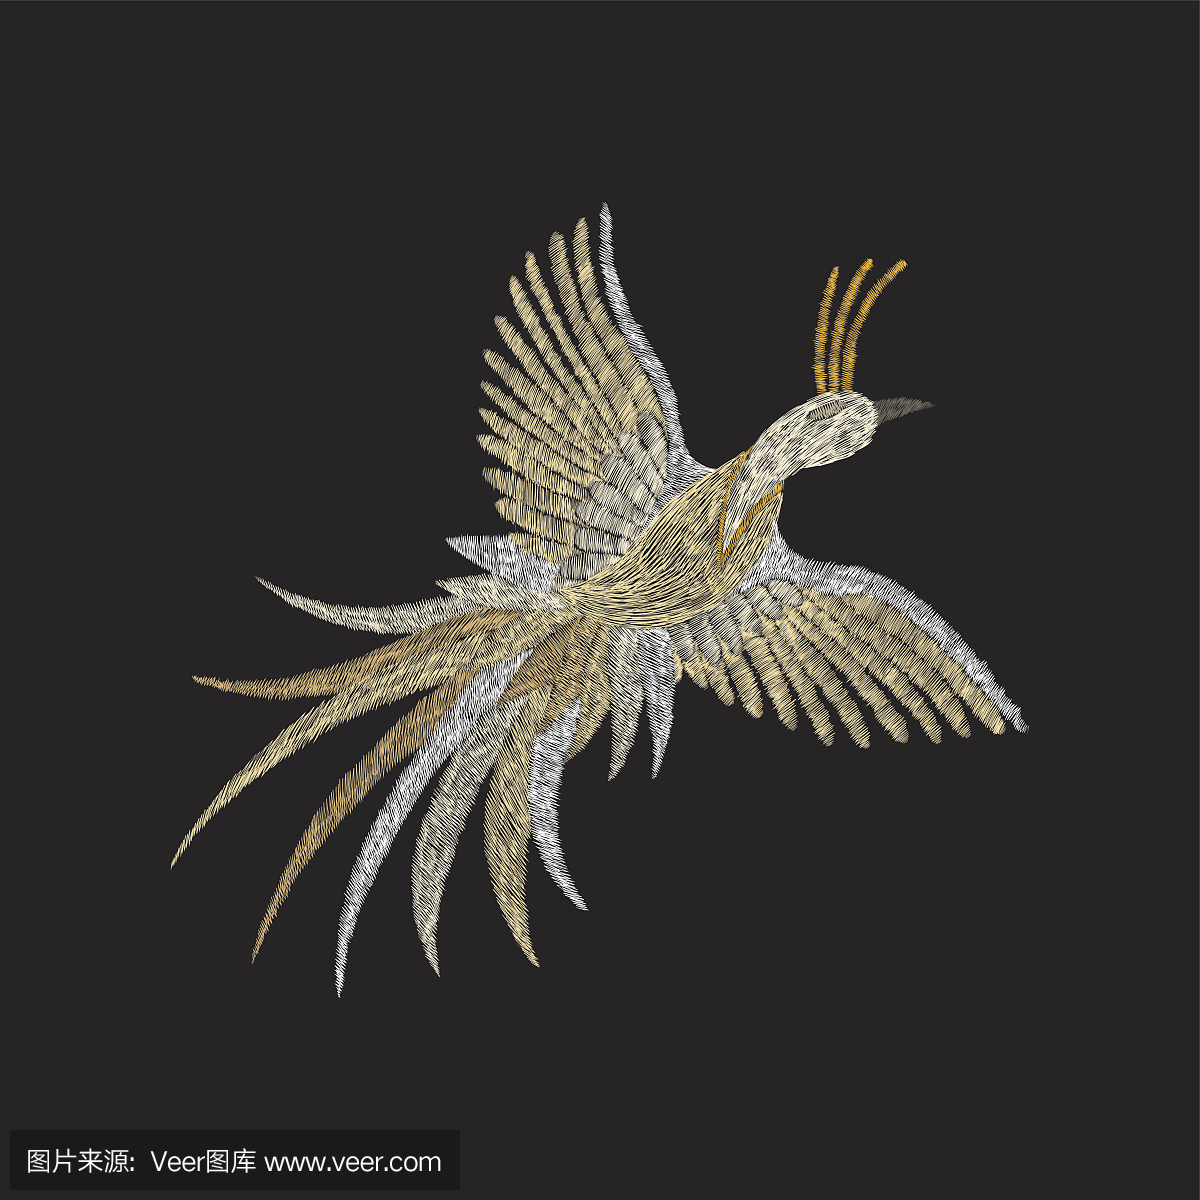 the golden bird. traditional stylish fashionable flo